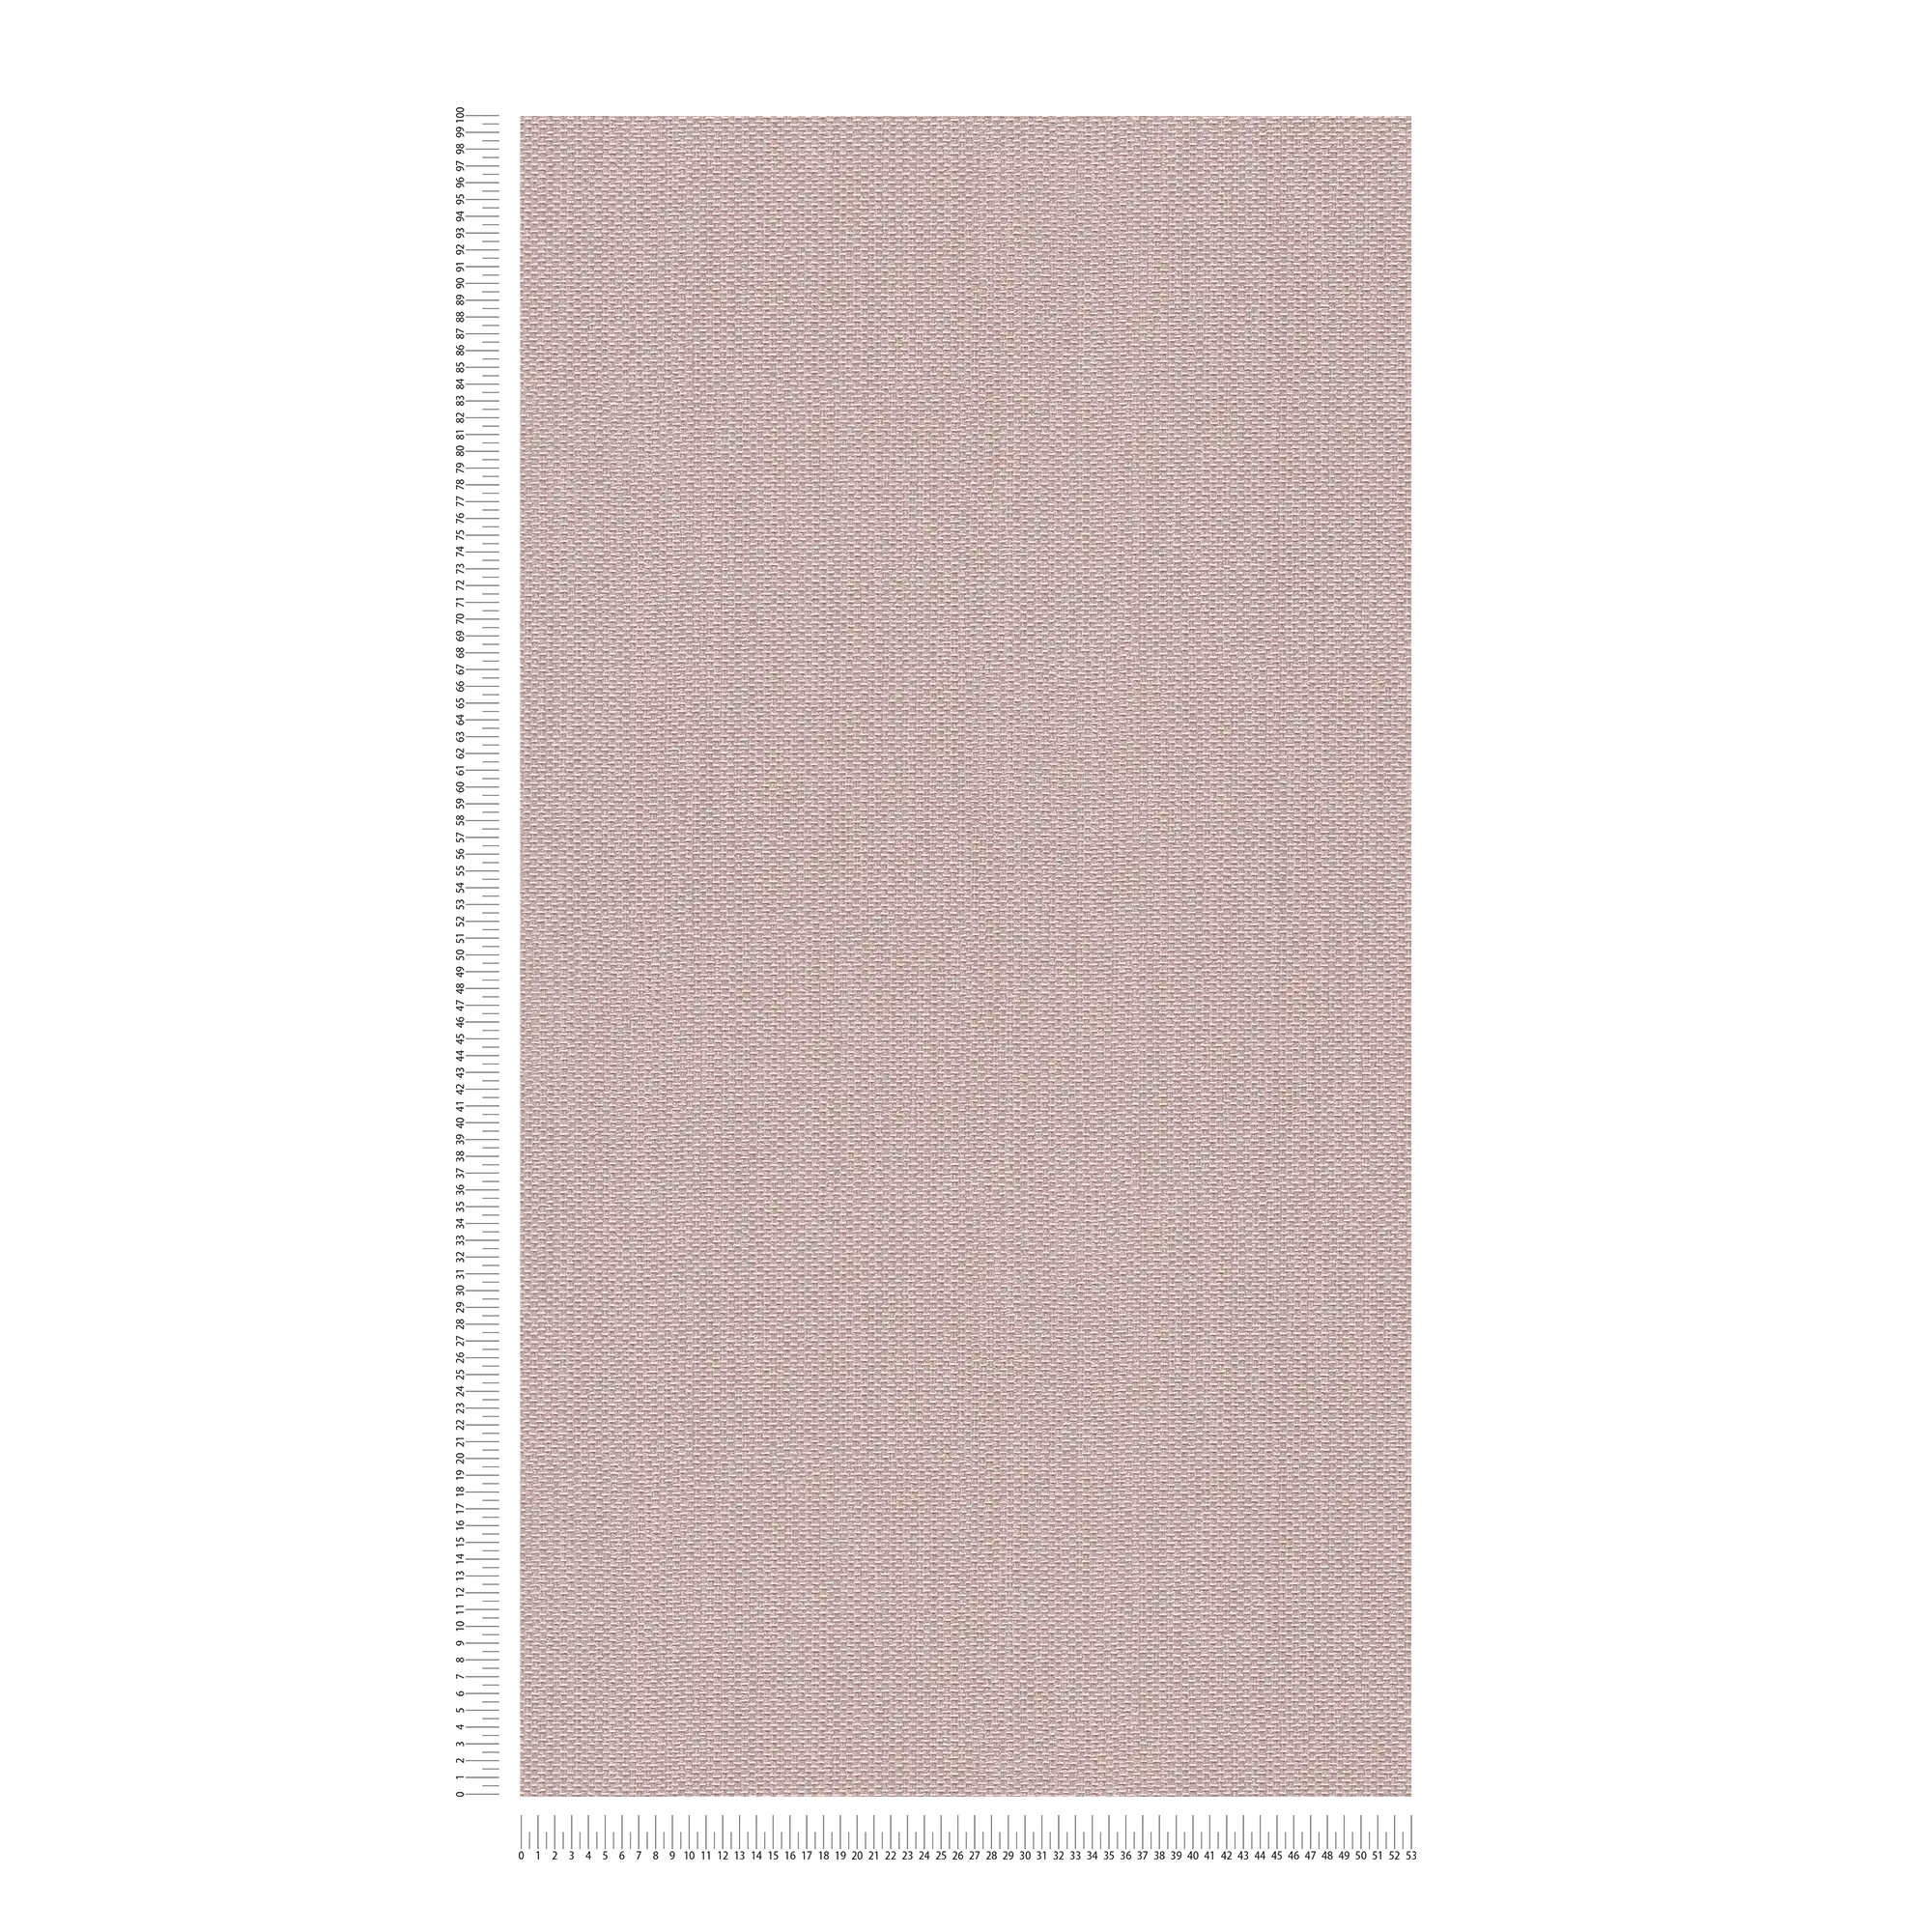             Papel pintado tejido-no tejido texturizado con aspecto textil - rosa, plata
        